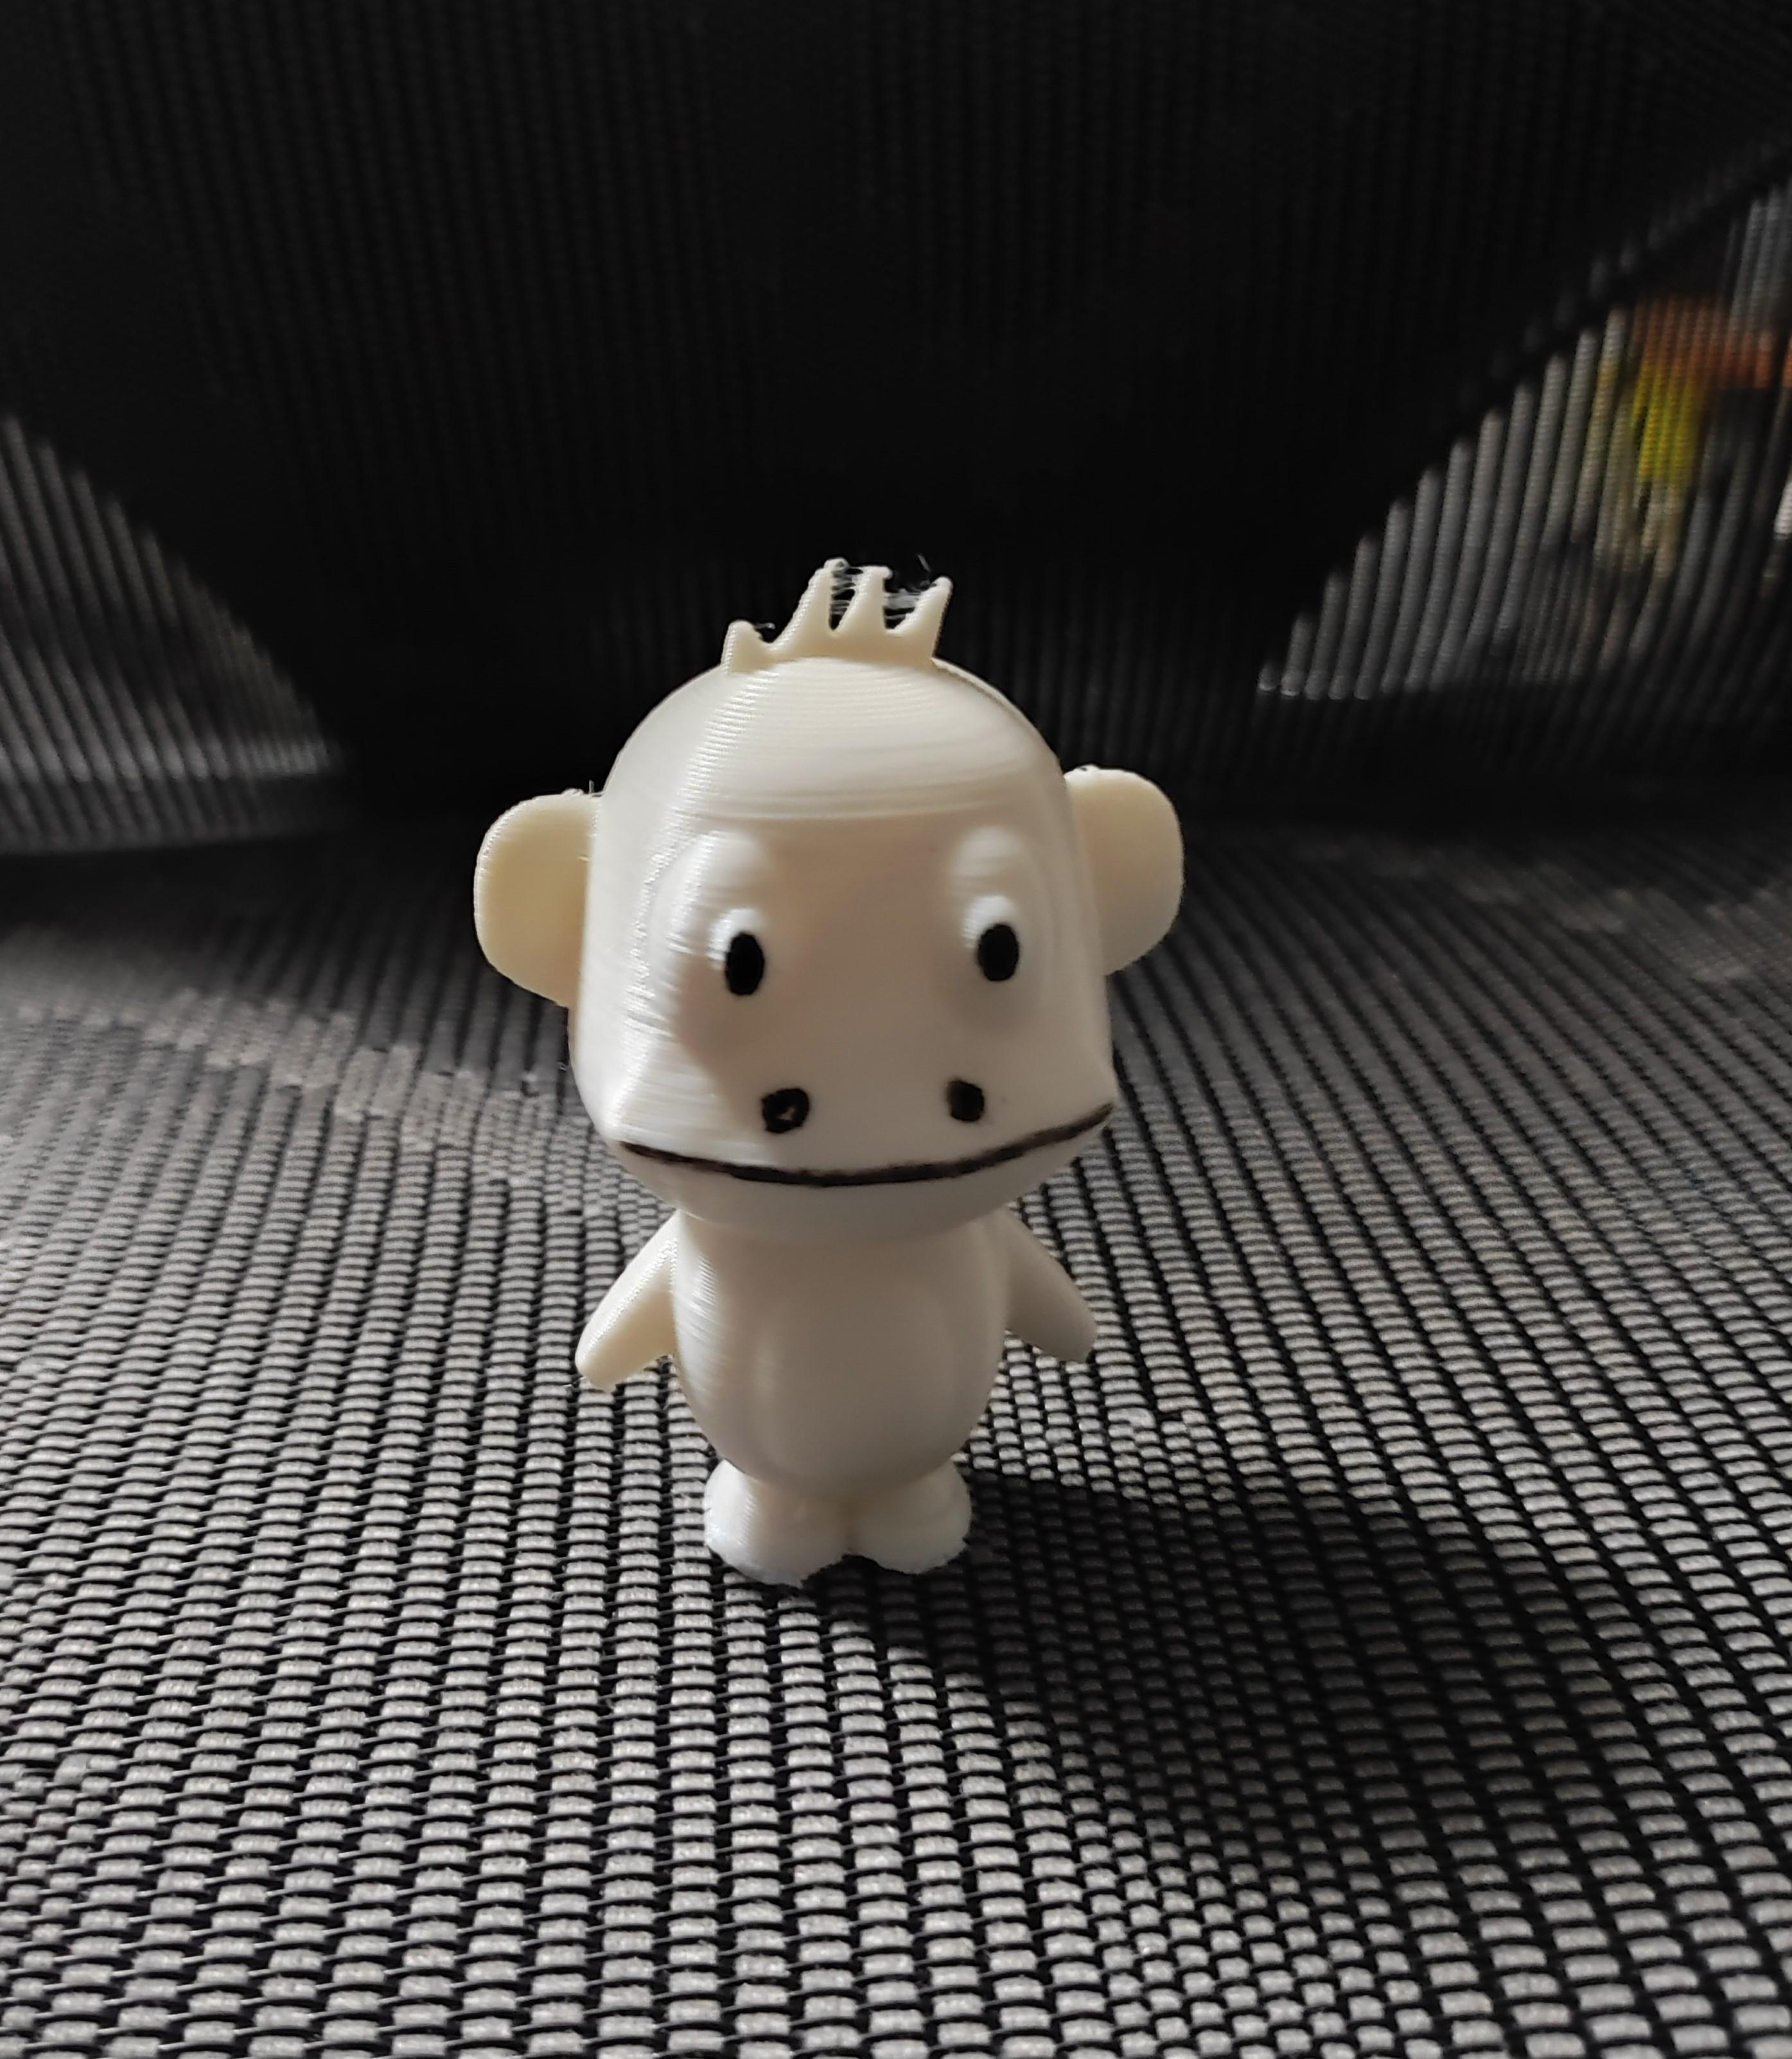 Monkey Character 3d model